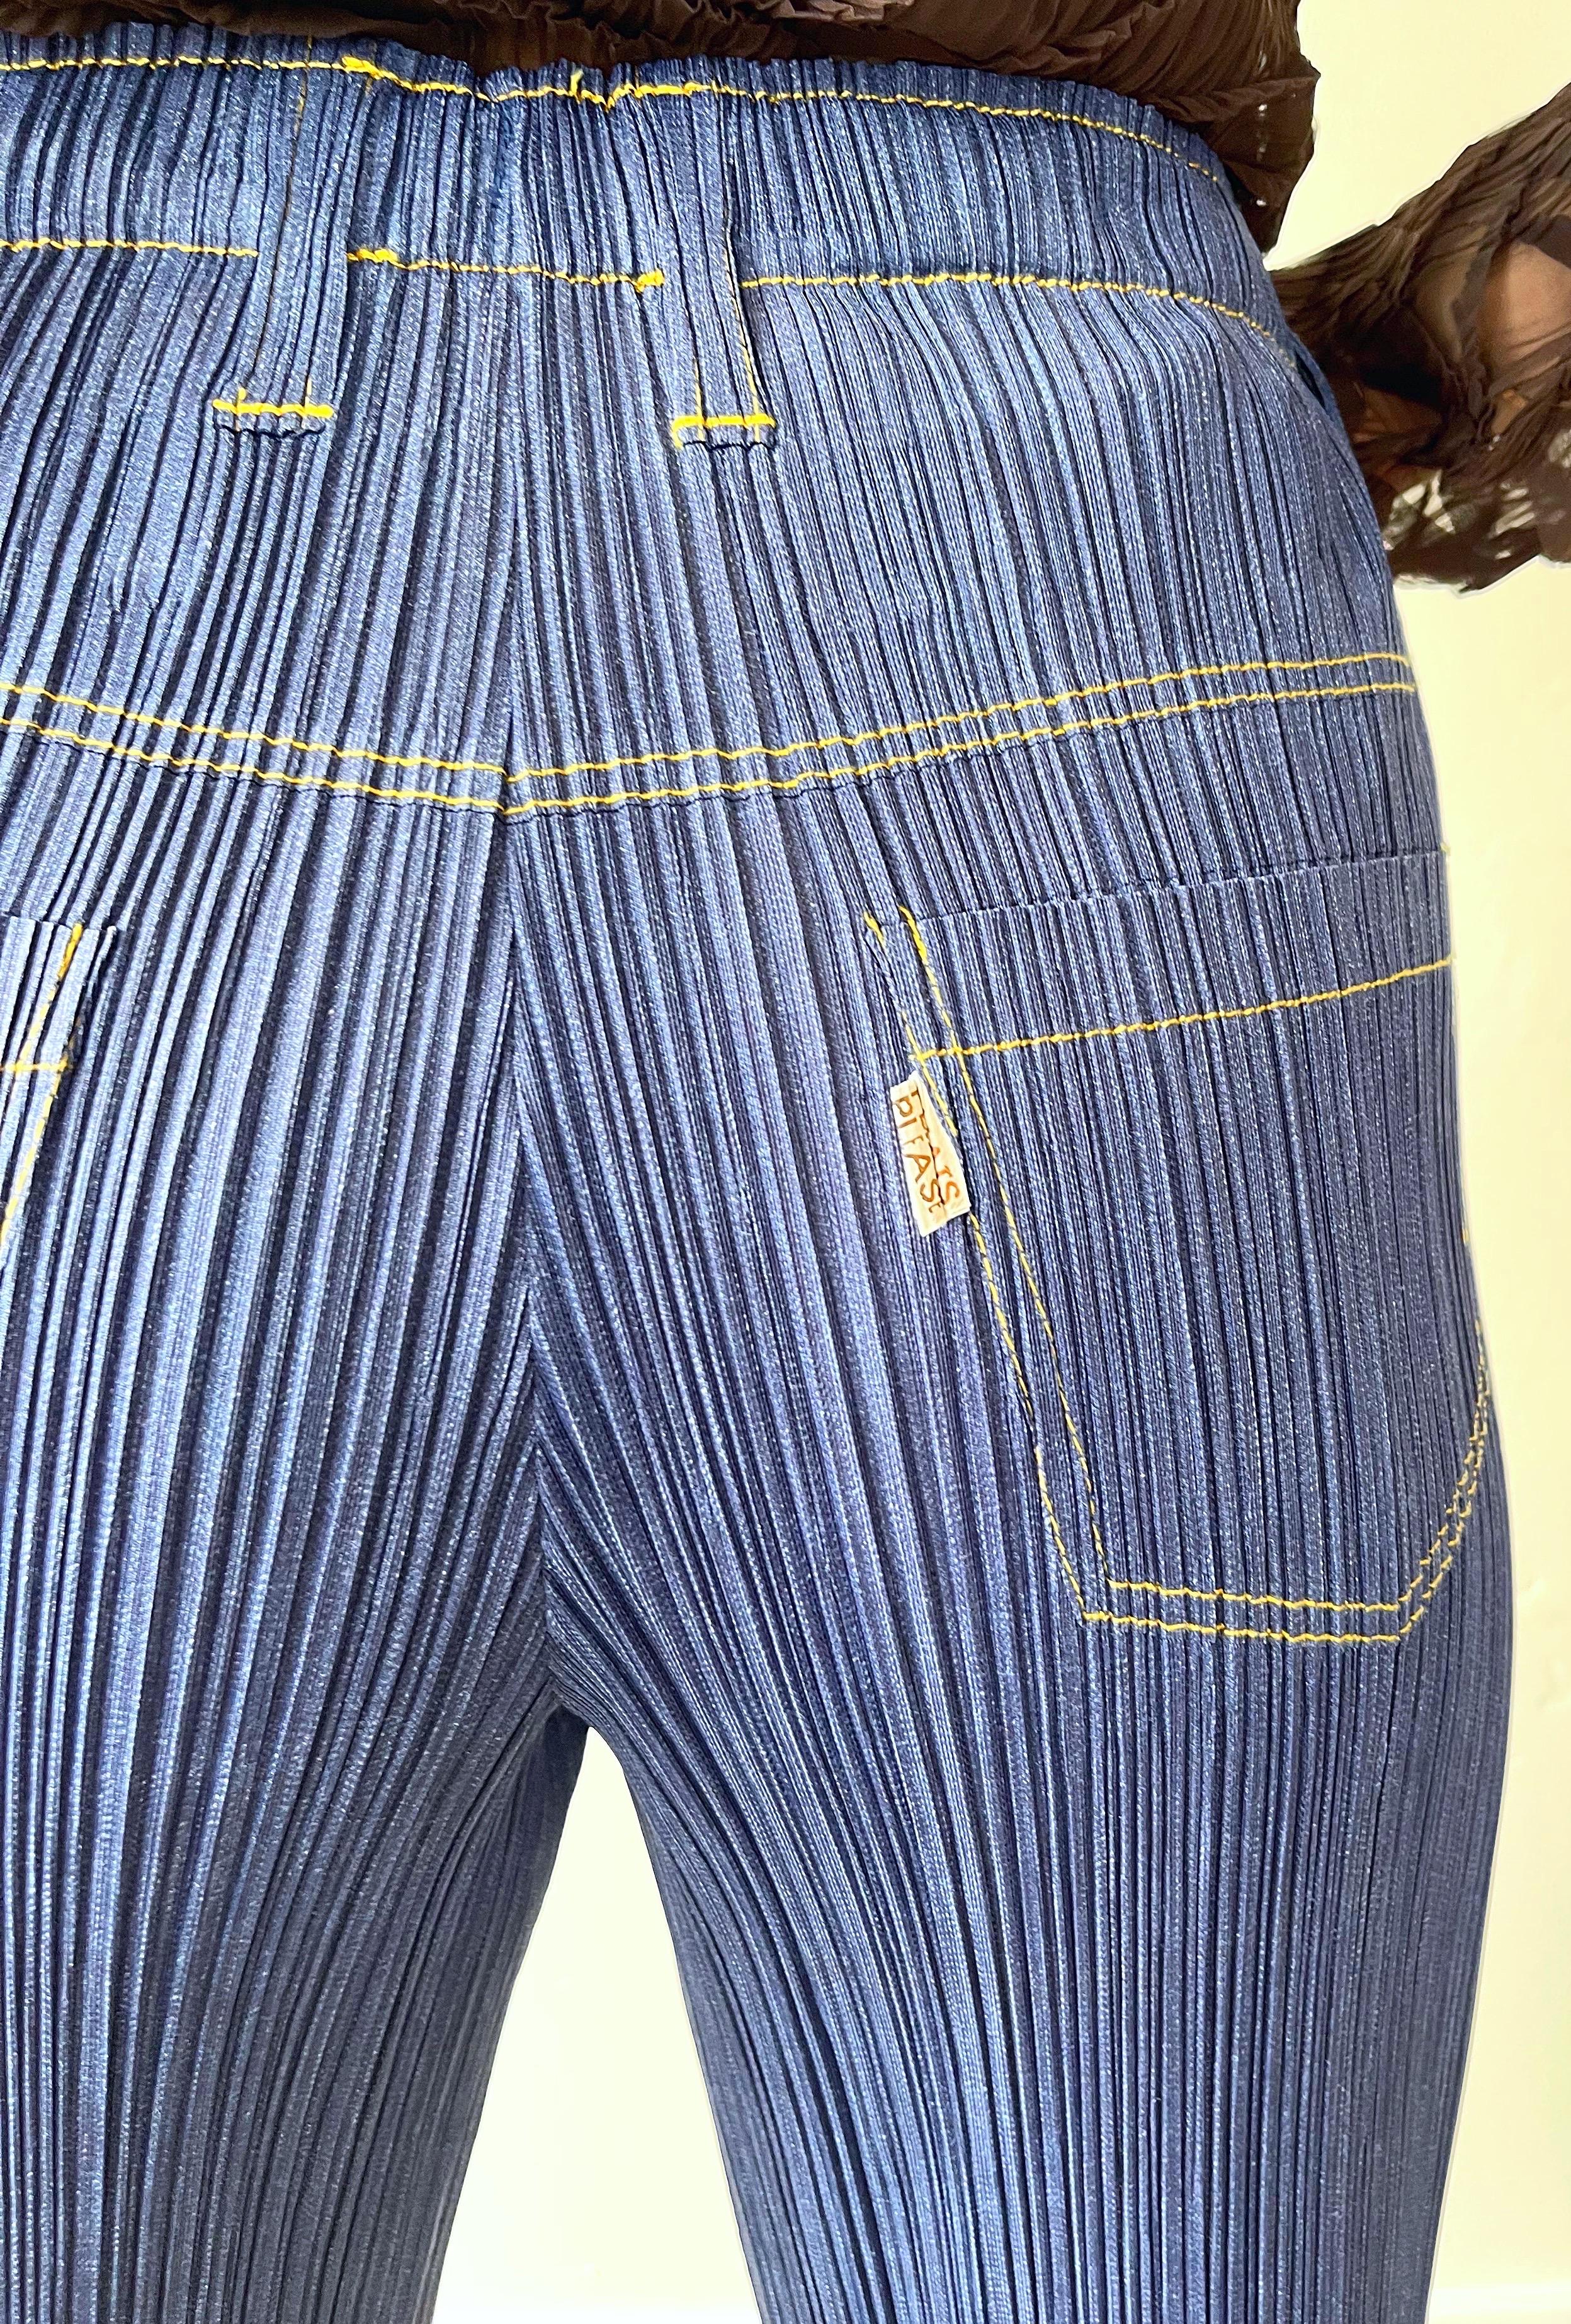 1990s Issey Miyake Pleats Please Trompe L’oeil Denim Blue Jeans Vintage Pants For Sale 8